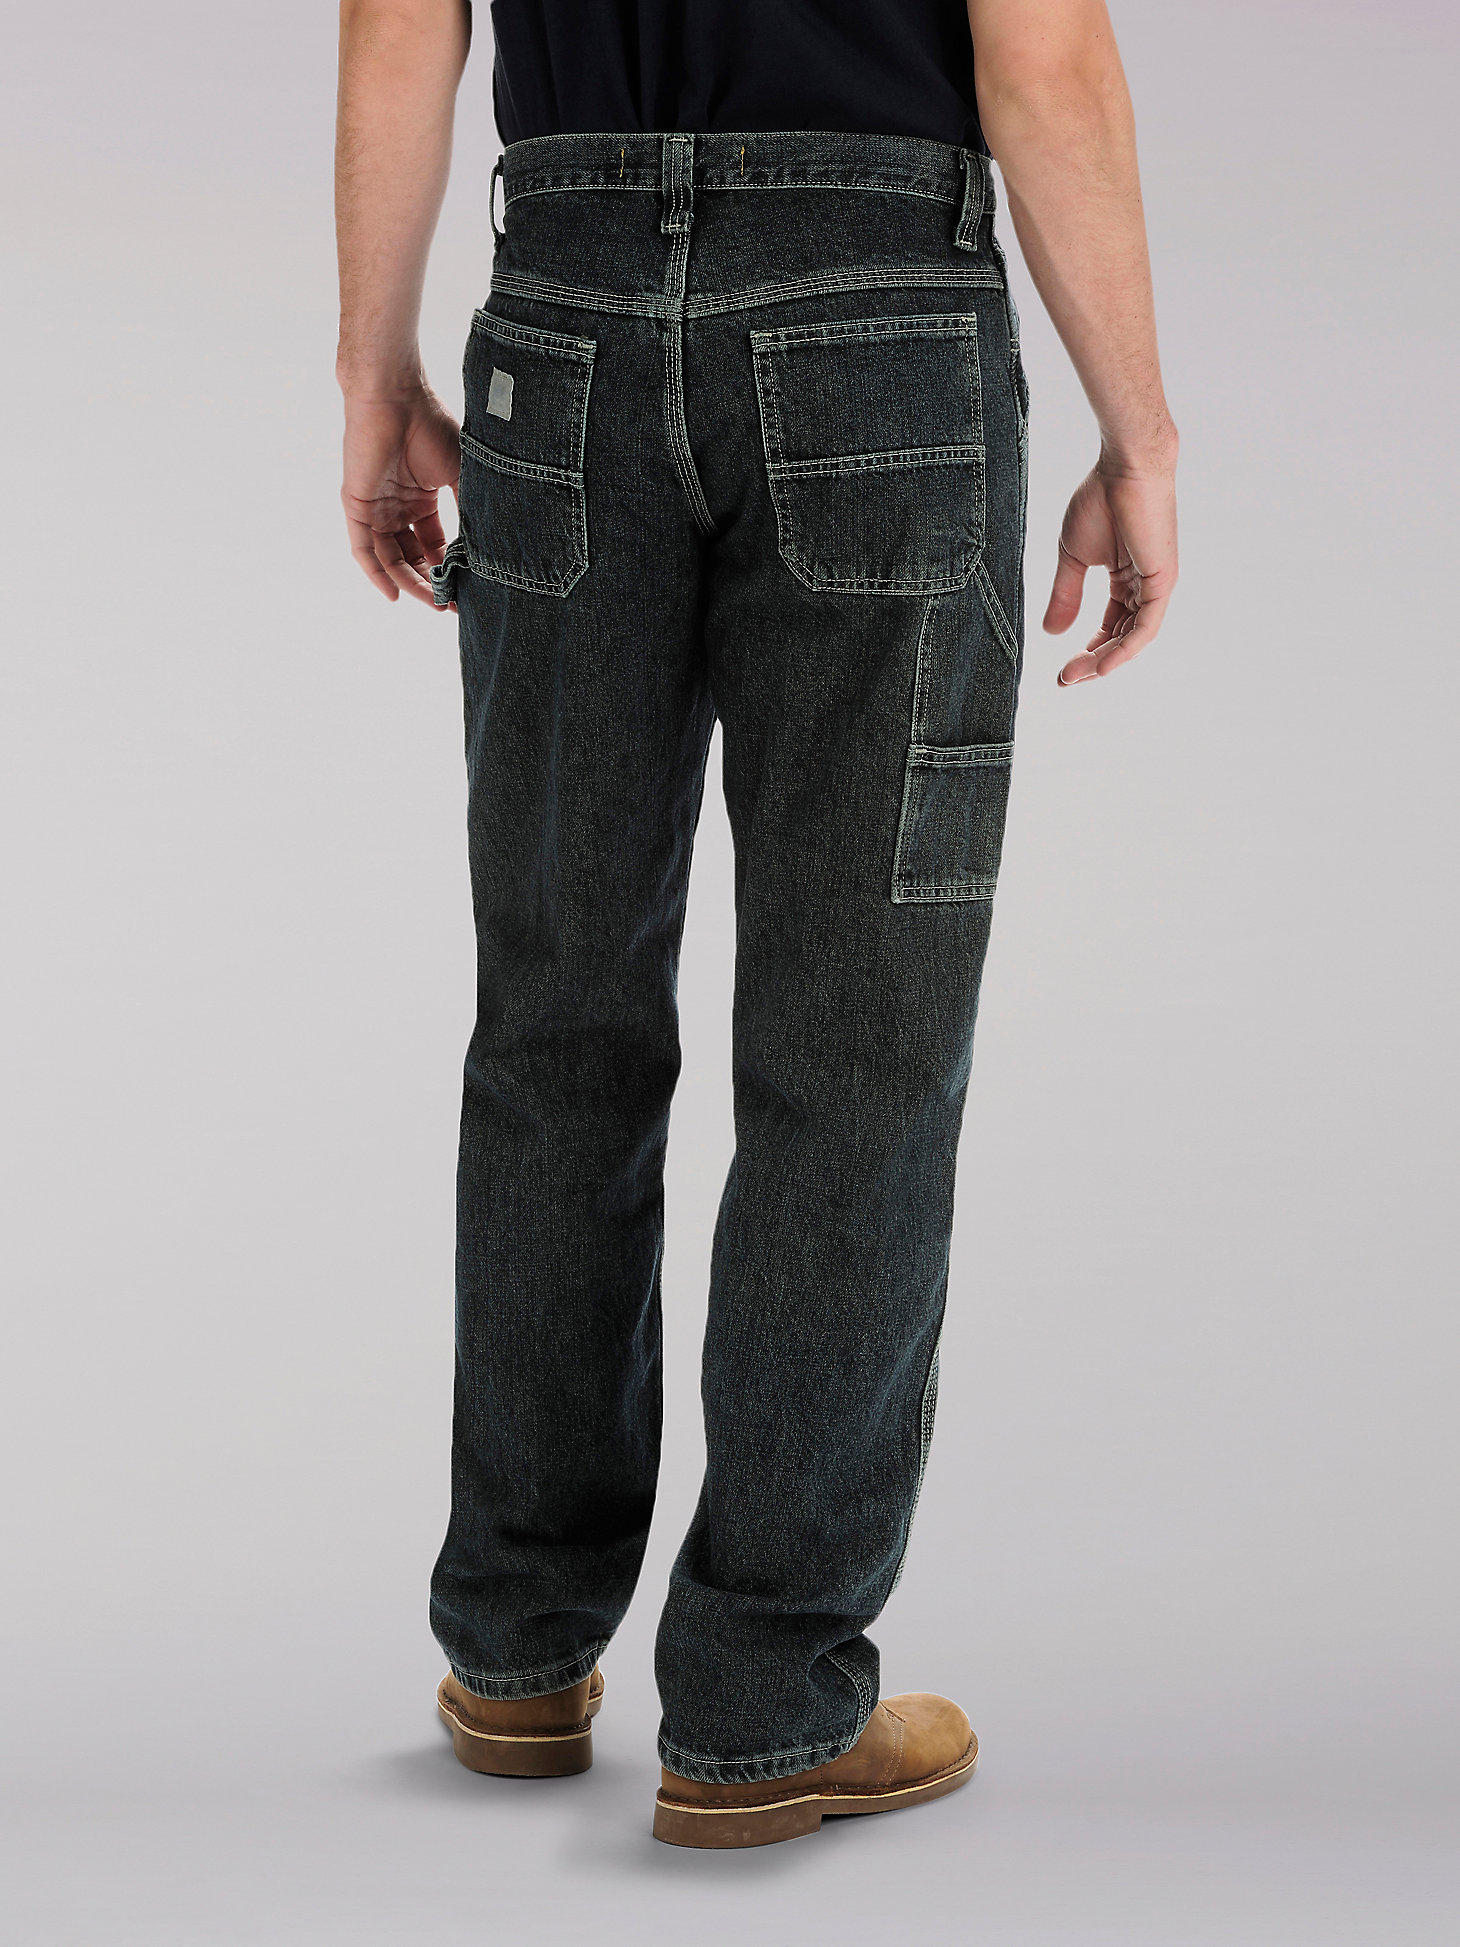 Men’s Comfort Fit Carpenter Jean (Big&Tall) in Quartz Stone alternative view 1